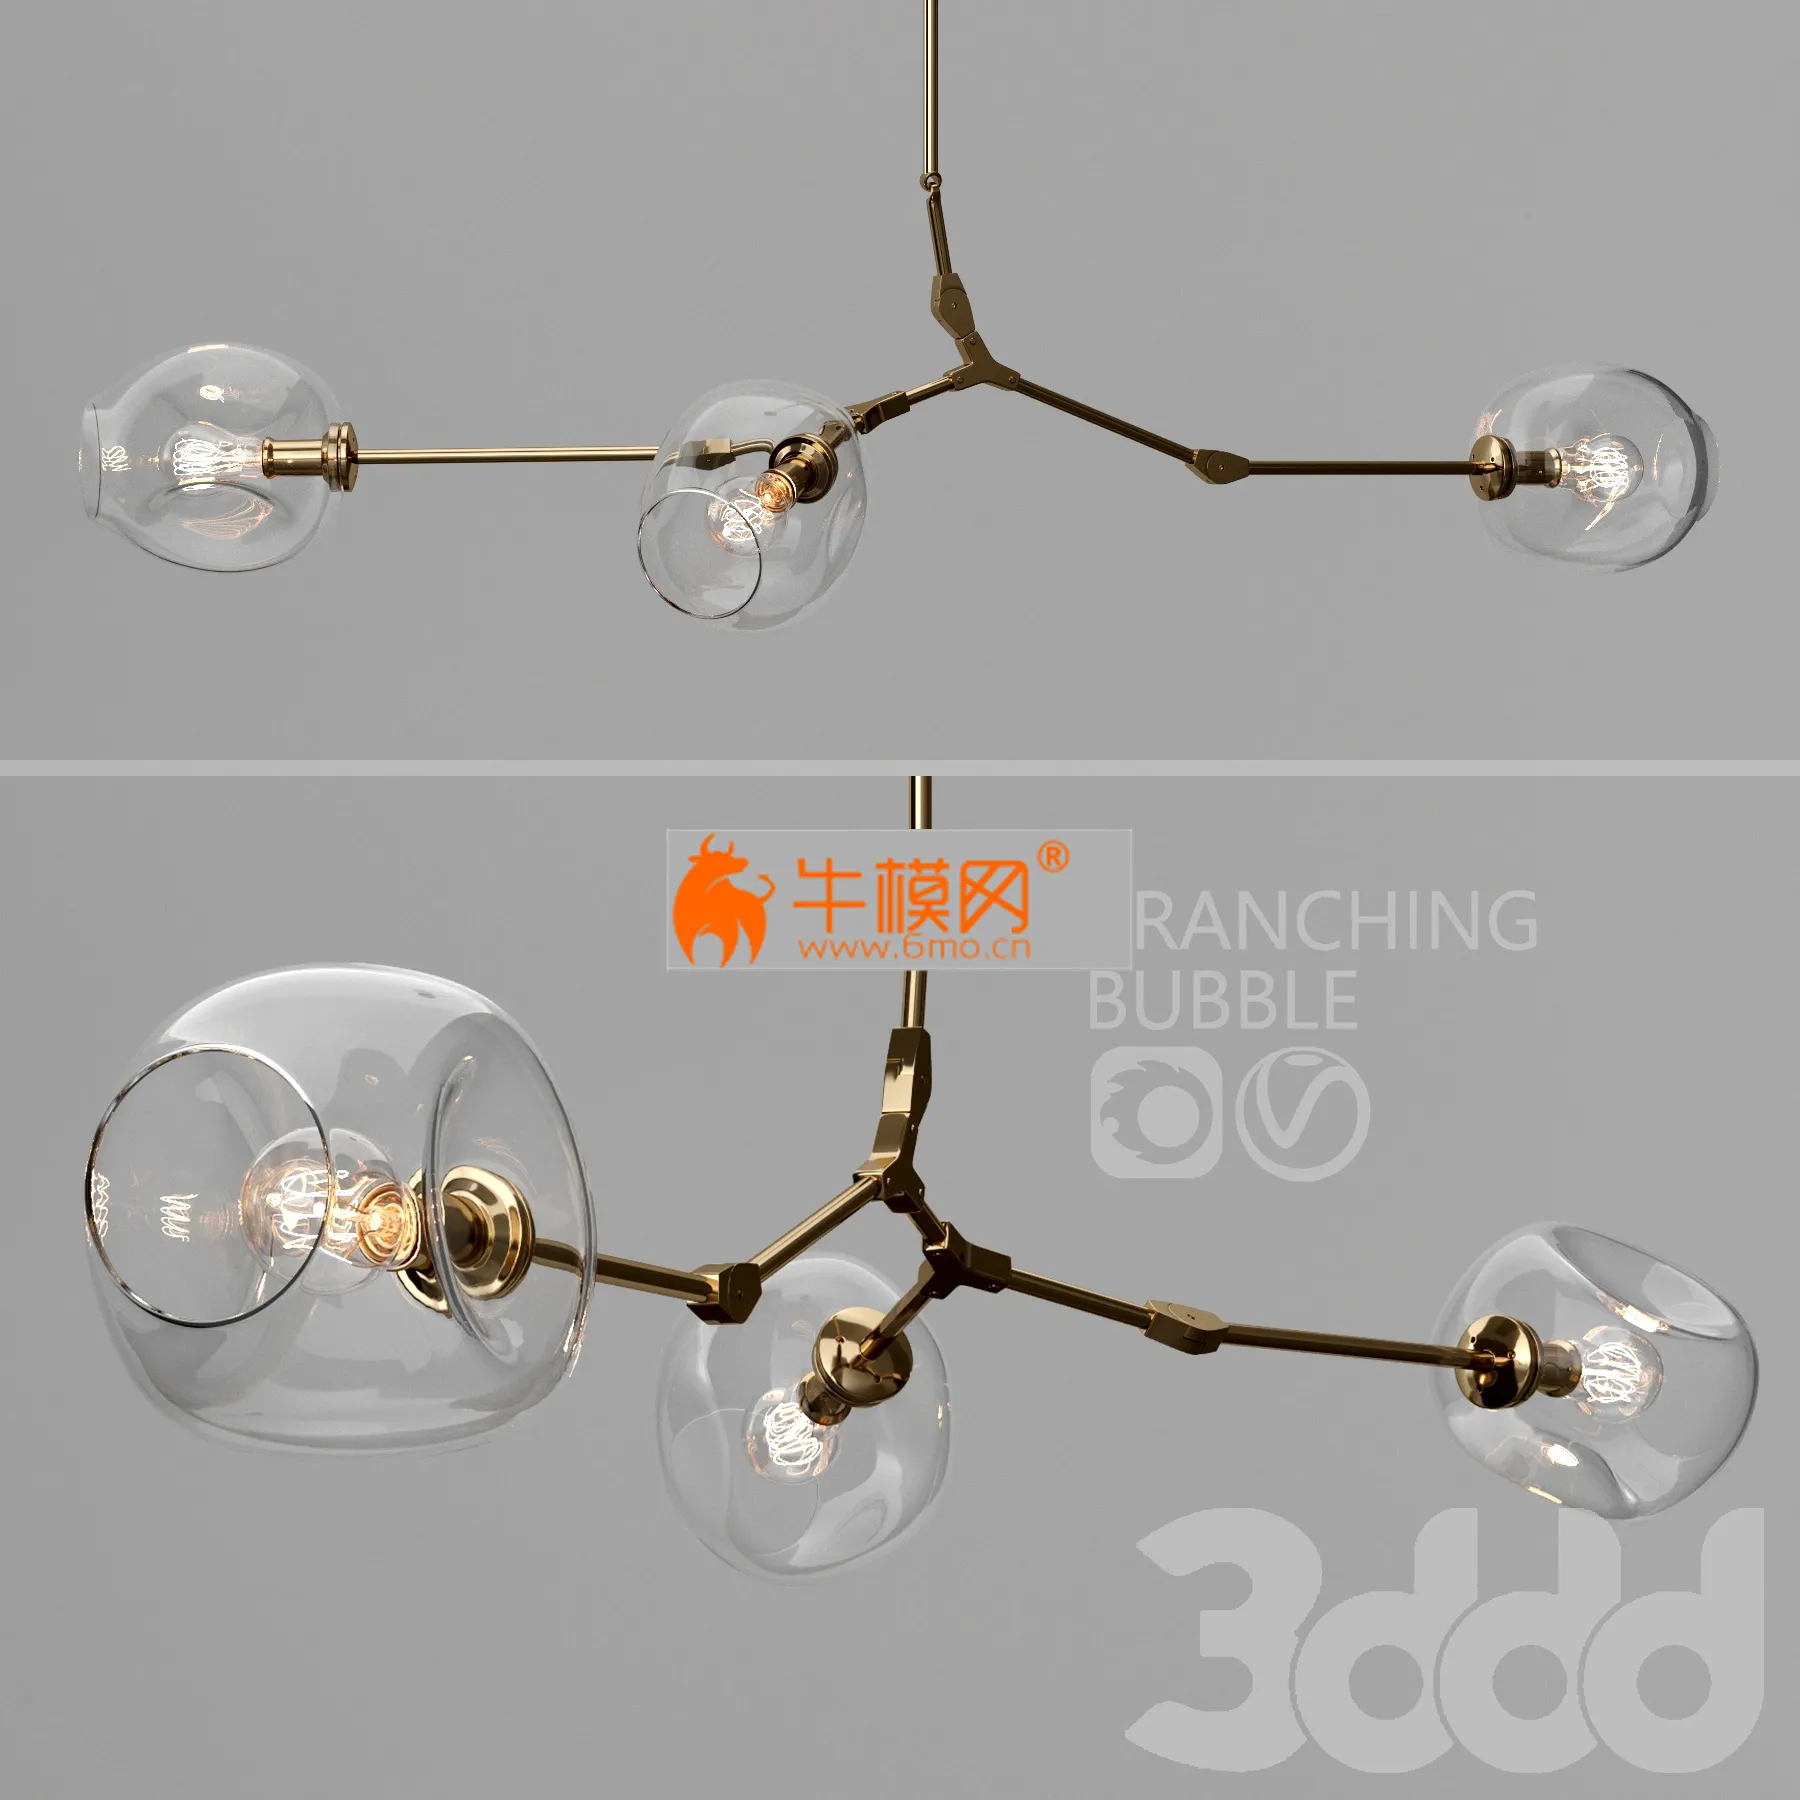 Branching bubble 3 lamps – 5276